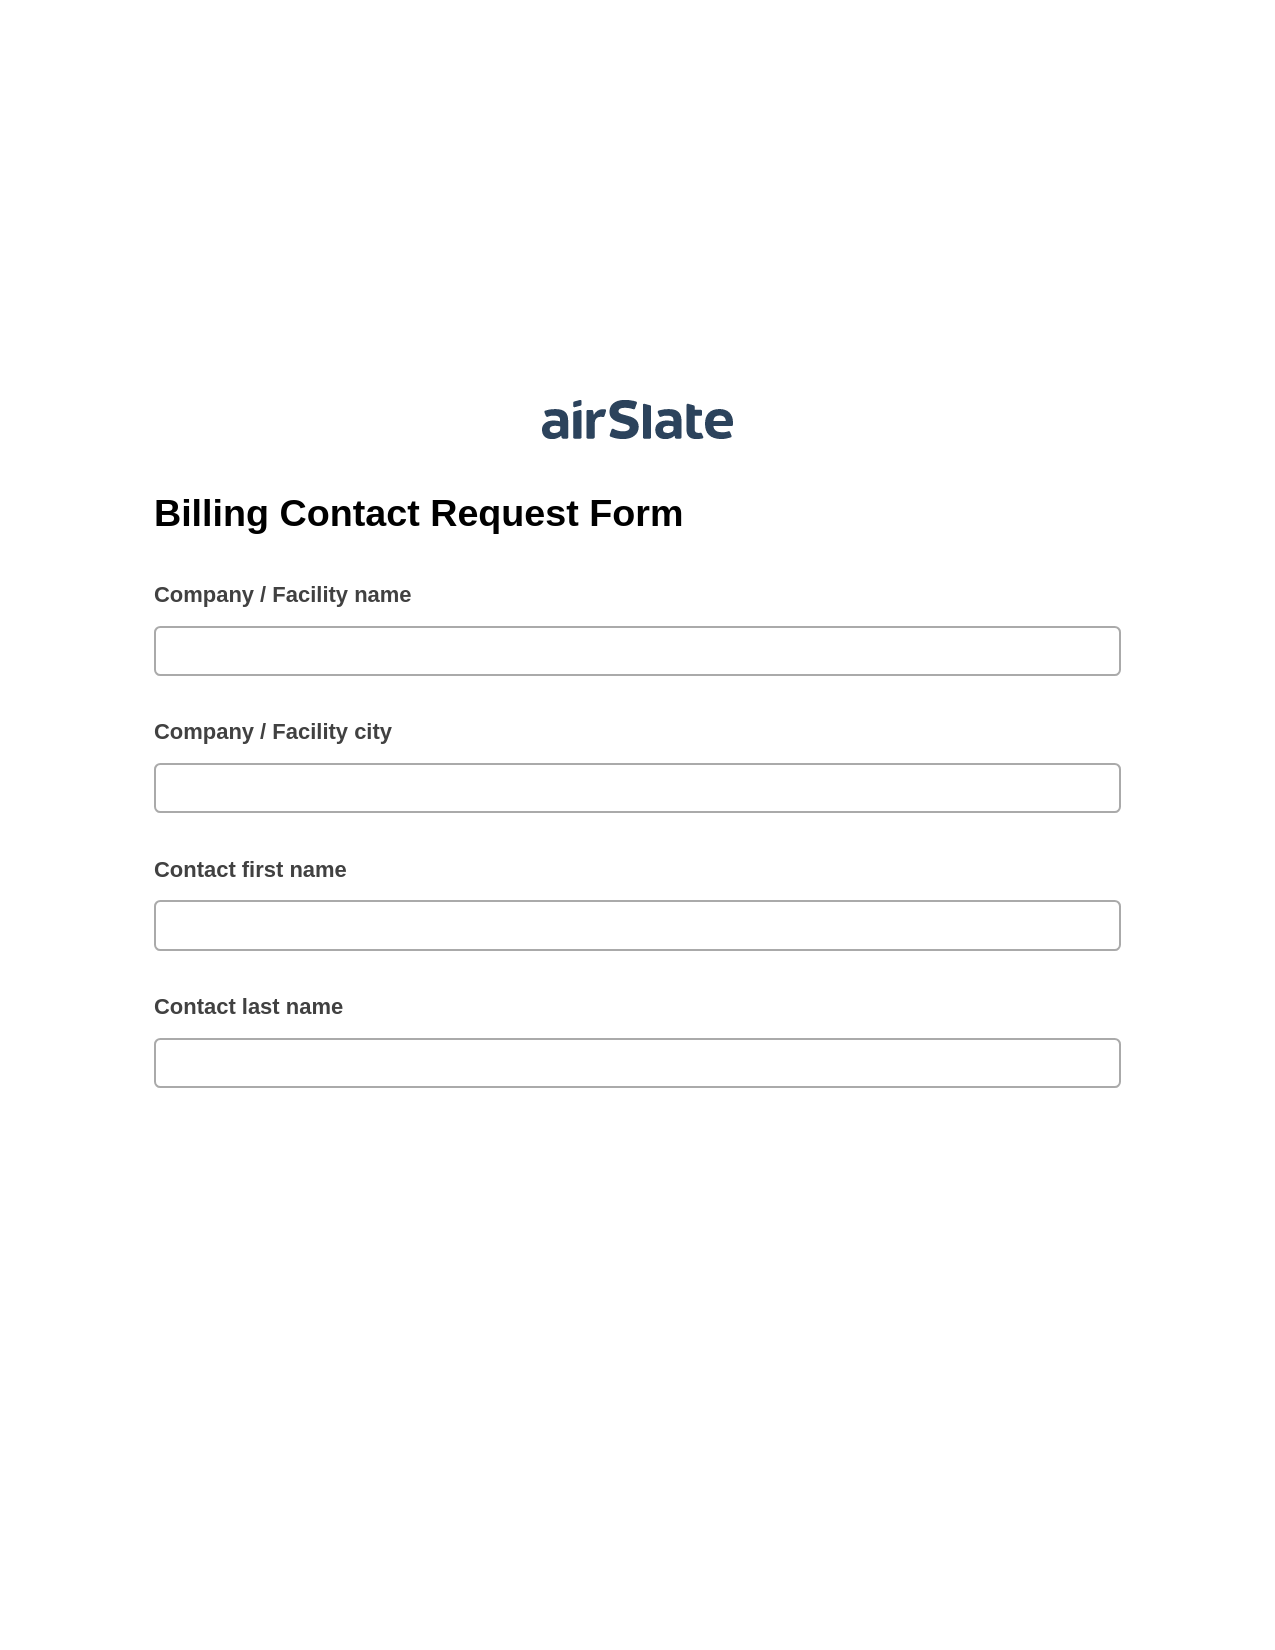 Multirole Billing Contact Request Form Pre-fill Dropdowns from Smartsheet Bot, SendGrid send Campaign bot, Slack Two-Way Binding Bot